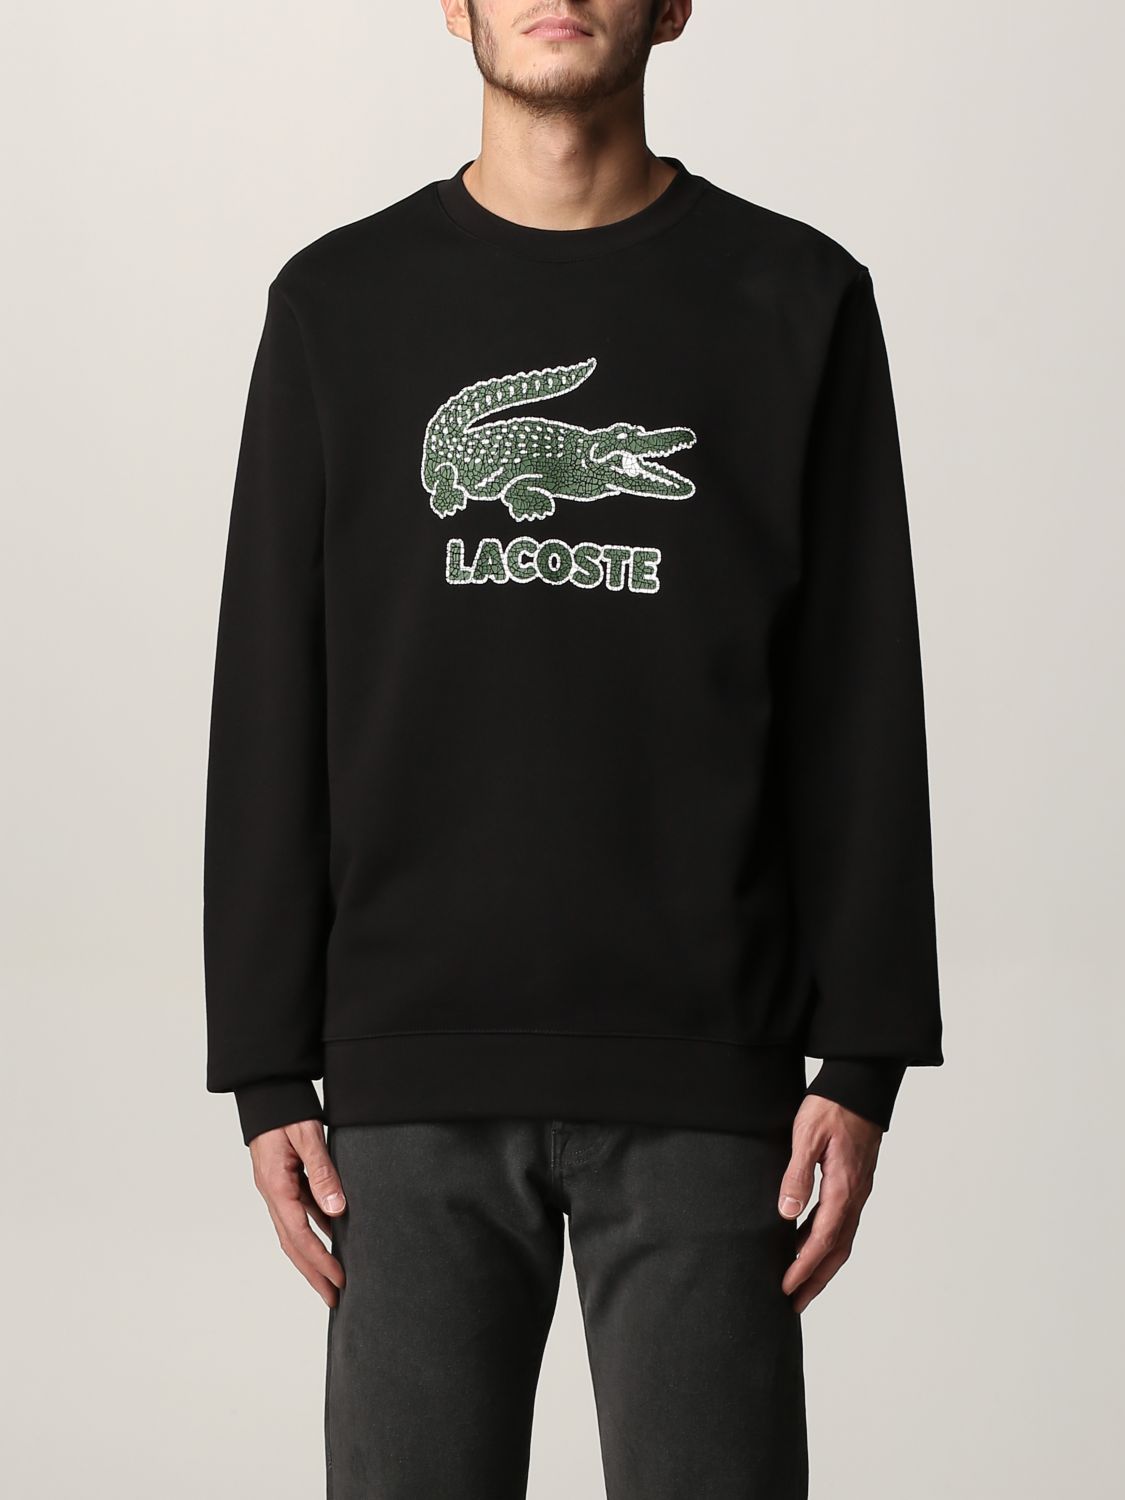 LACOSTE: Sweatshirt | Sweatshirt Lacoste Men Black | Sweatshirt Lacoste SH0065 GIGLIO.COM